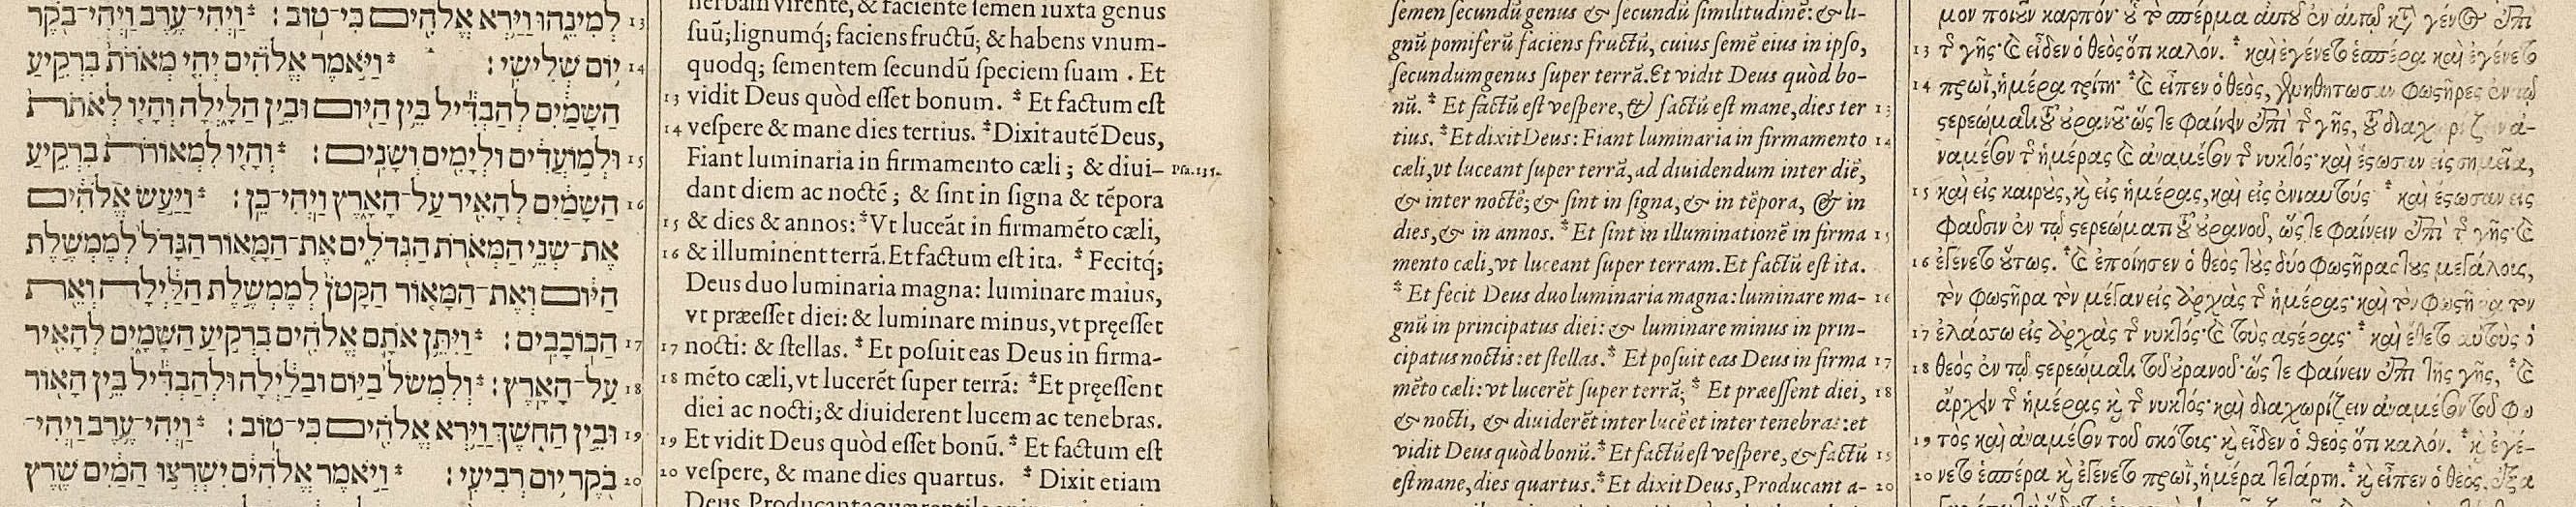 Biblia sacra Hebraice Chaldaice Graece Latine Christoffel Plantijn detail